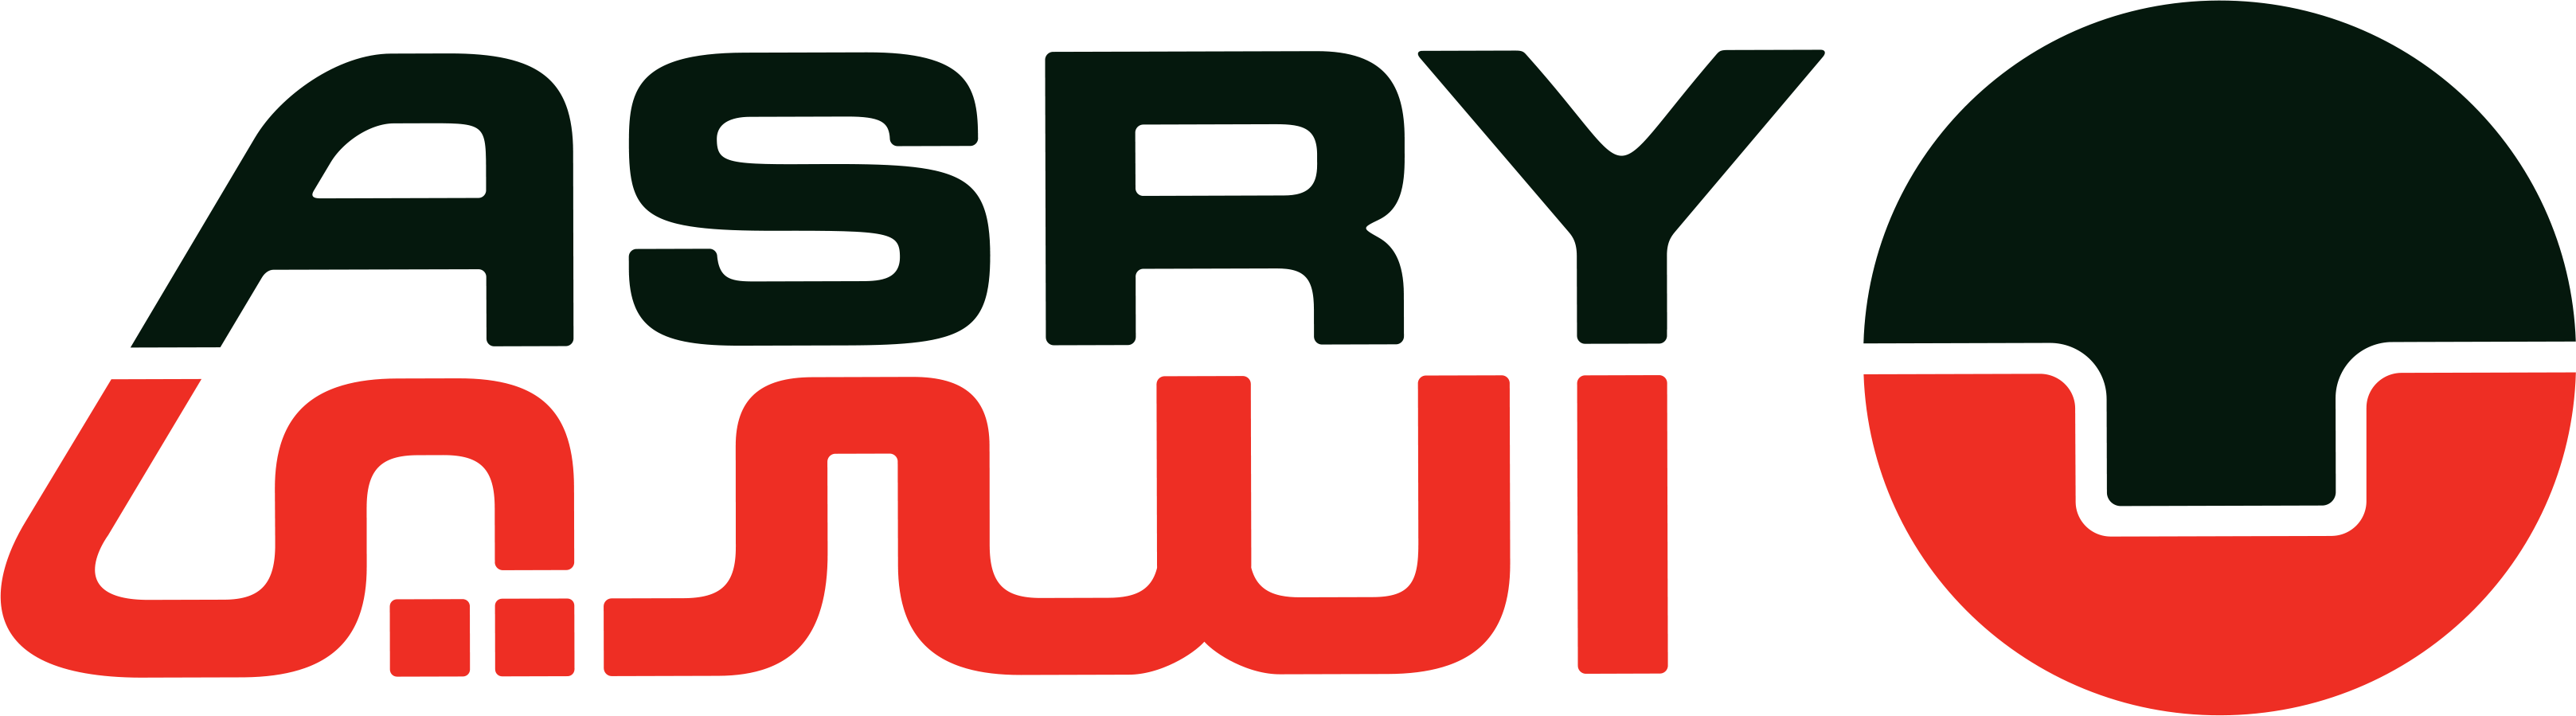 asry_logo